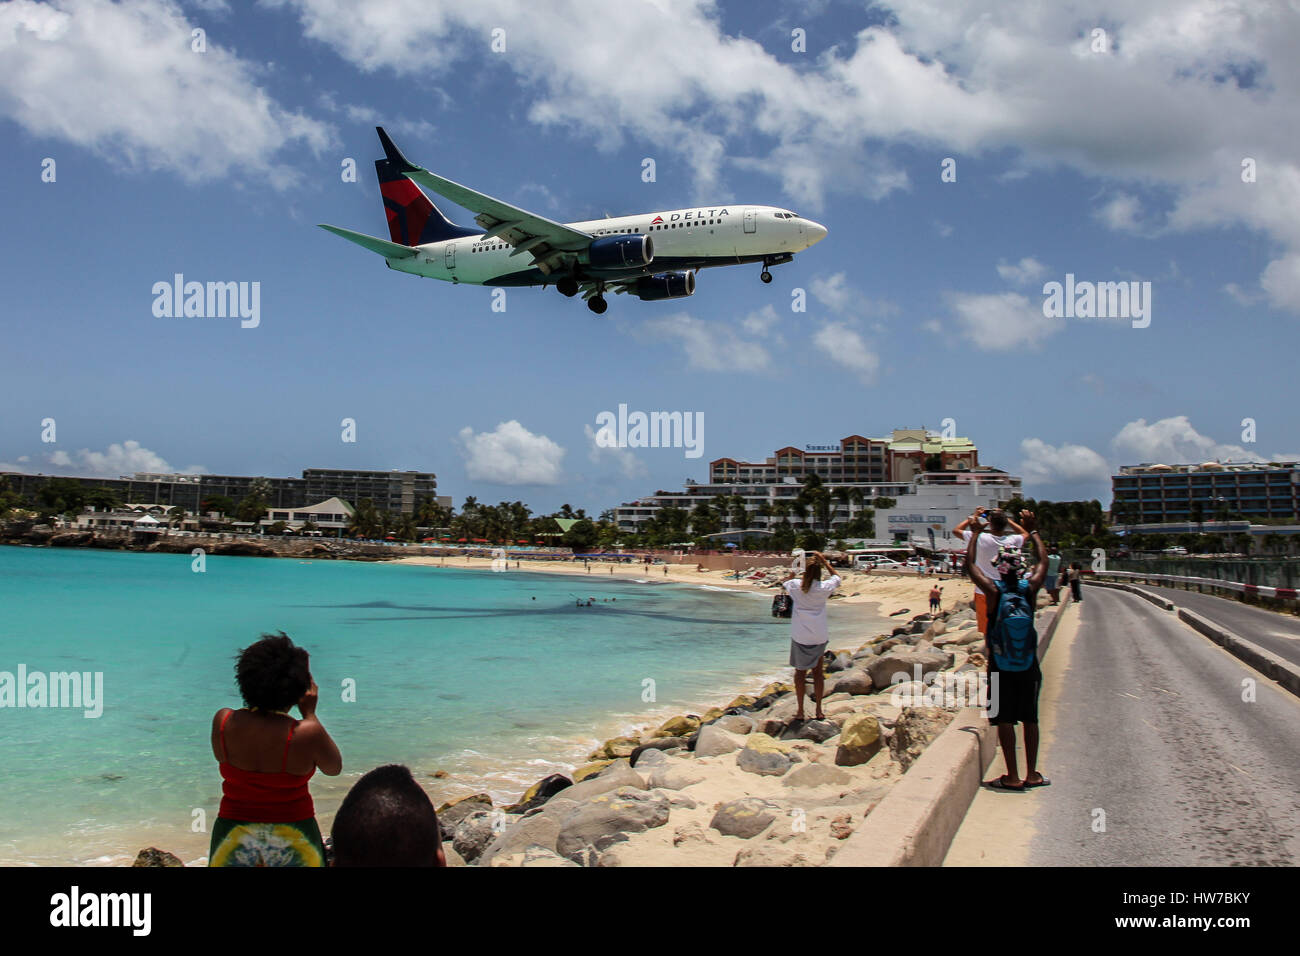 Airplane Delta is landing on Princess Juliana International Airport, over Maho Bay Beach seen in St.Martin/St.Maarten. Stock Photo